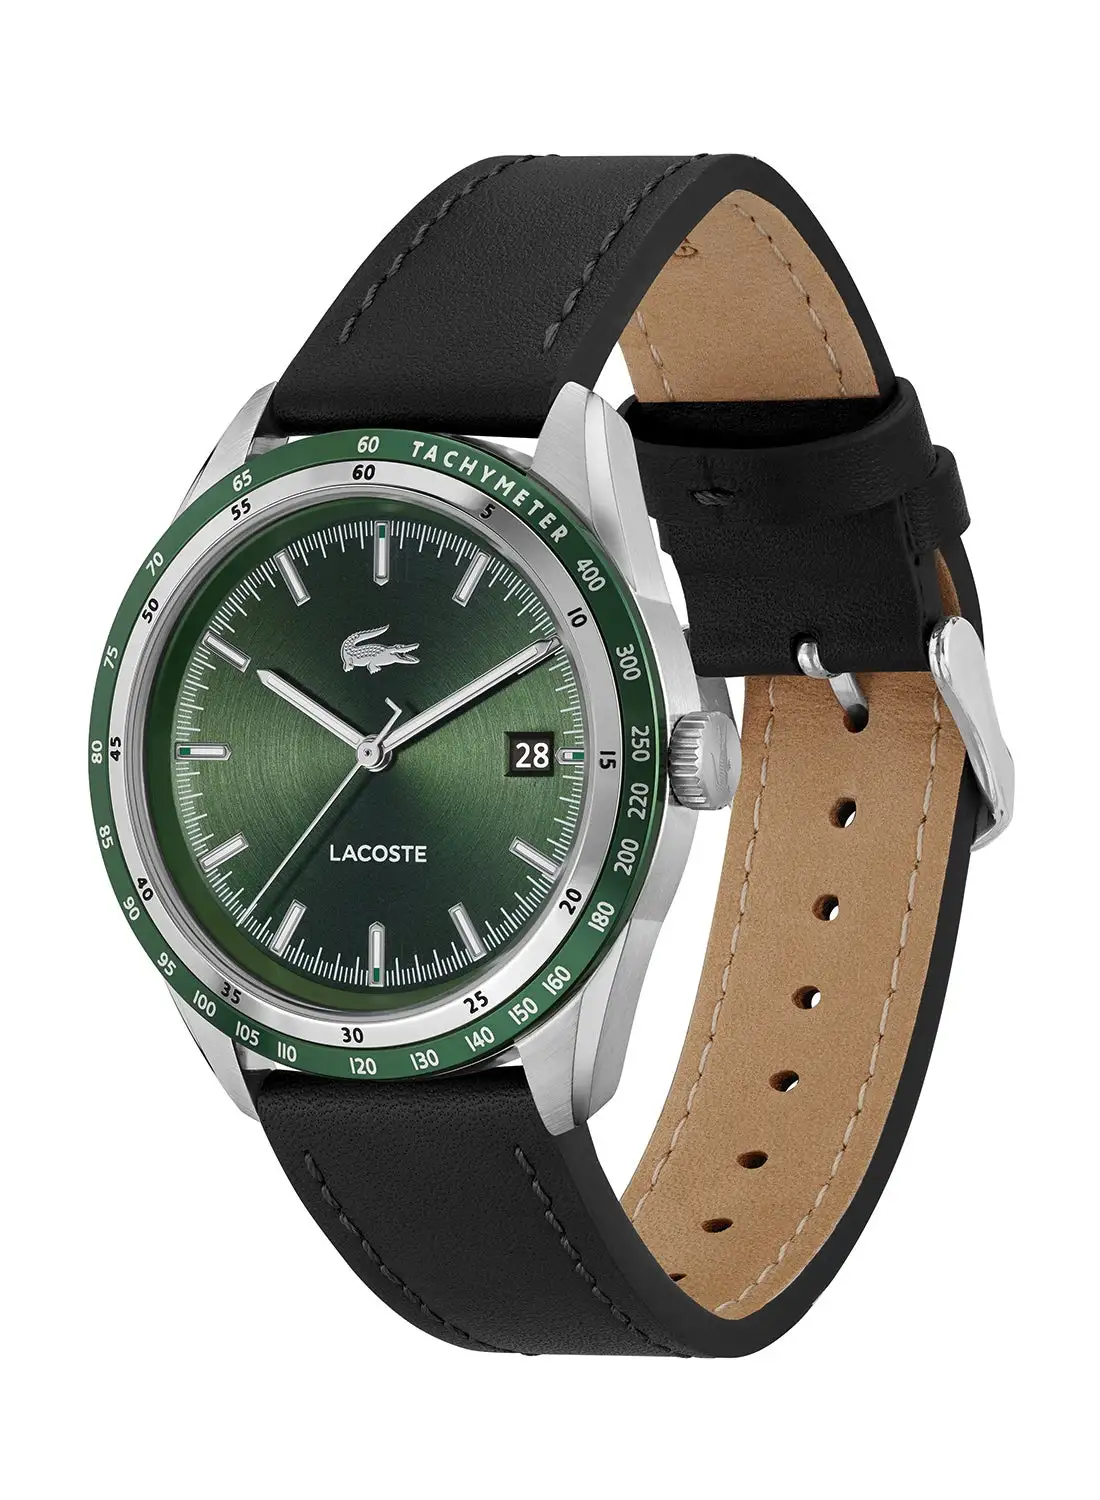 LACOSTE Men's Analog Round Shape Leather Wrist Watch 2011292 - 40 Mm